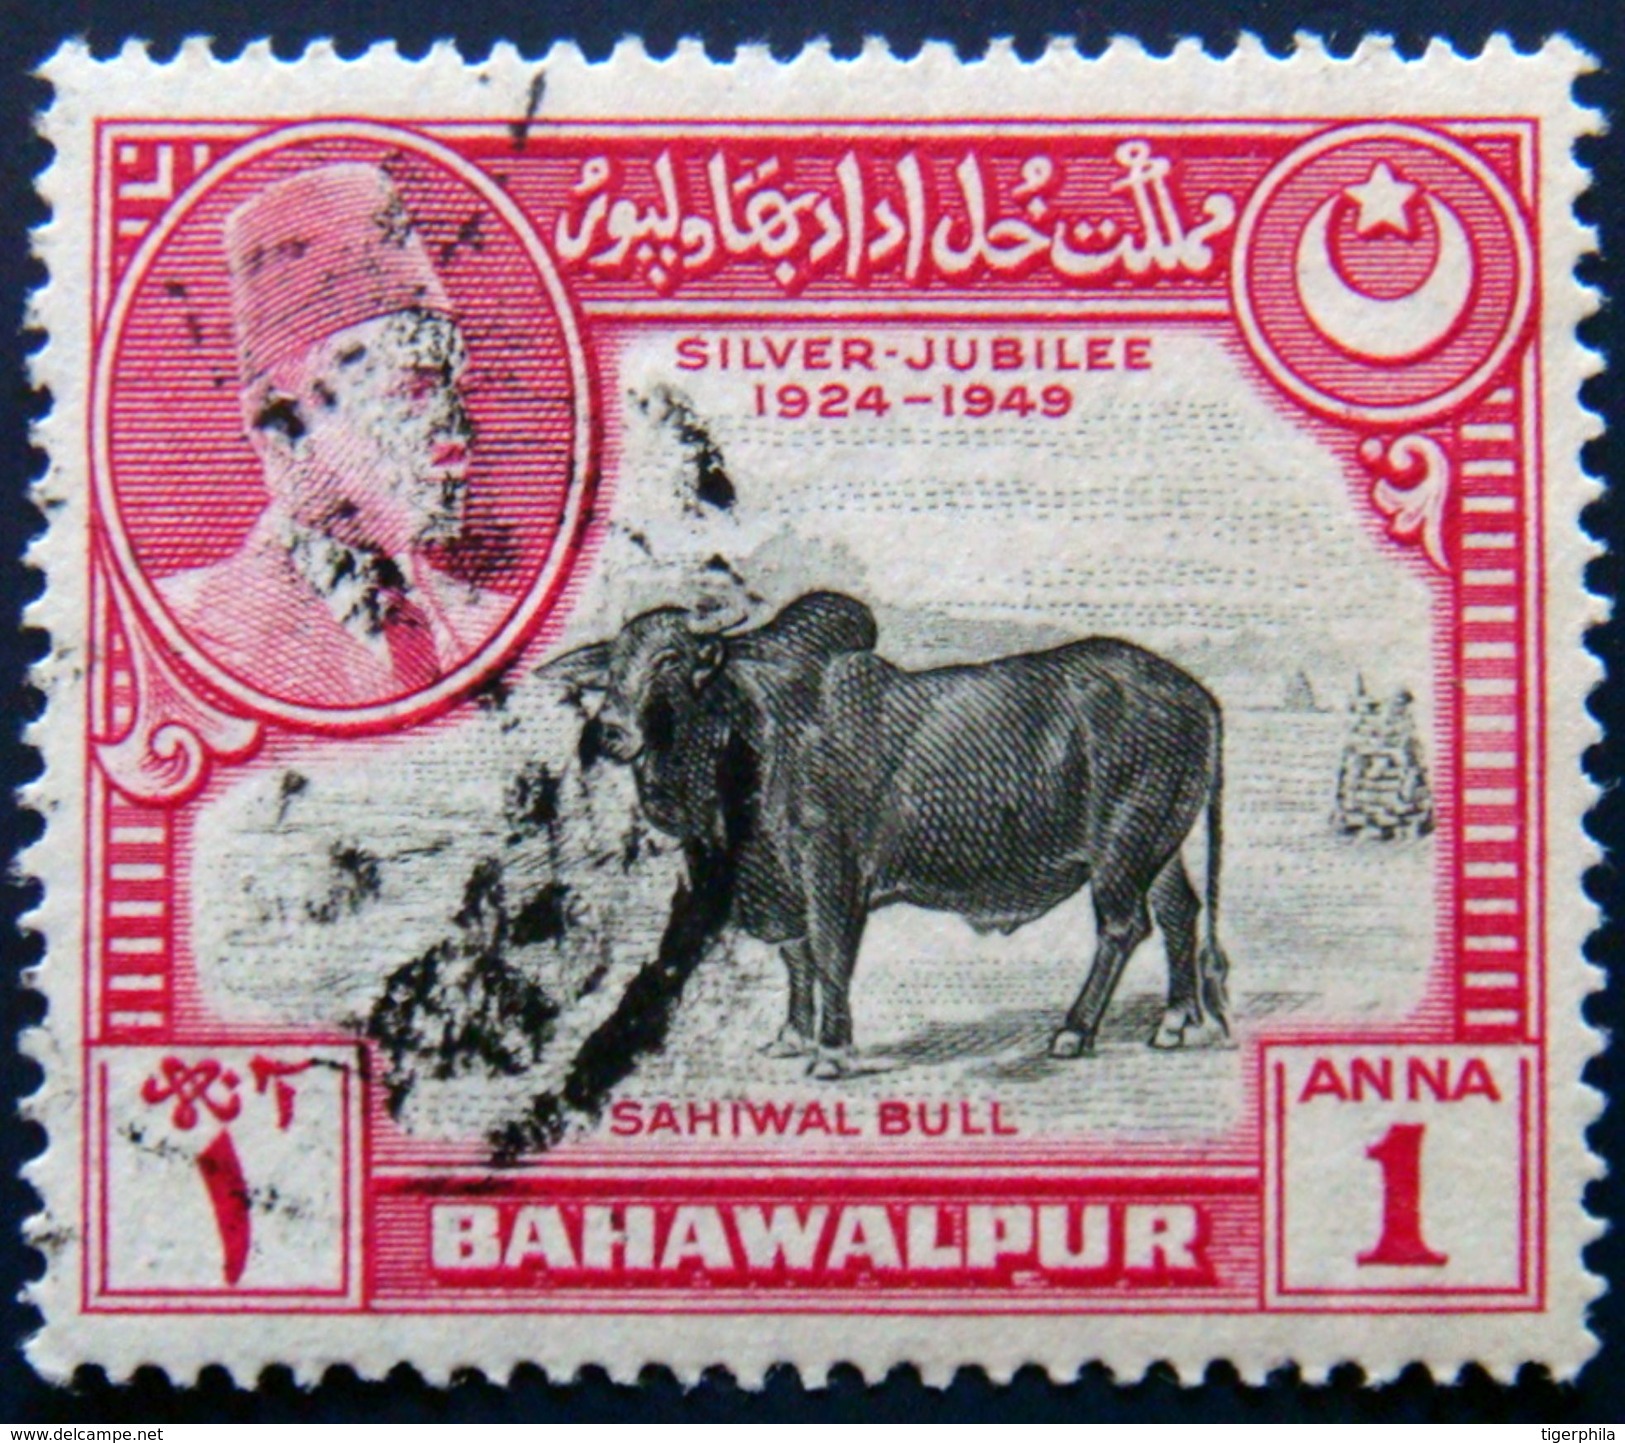 BAHAWALPUR 1949 1a Sahiwal Bull Used Scott25 CV$8 - Bahawalpur